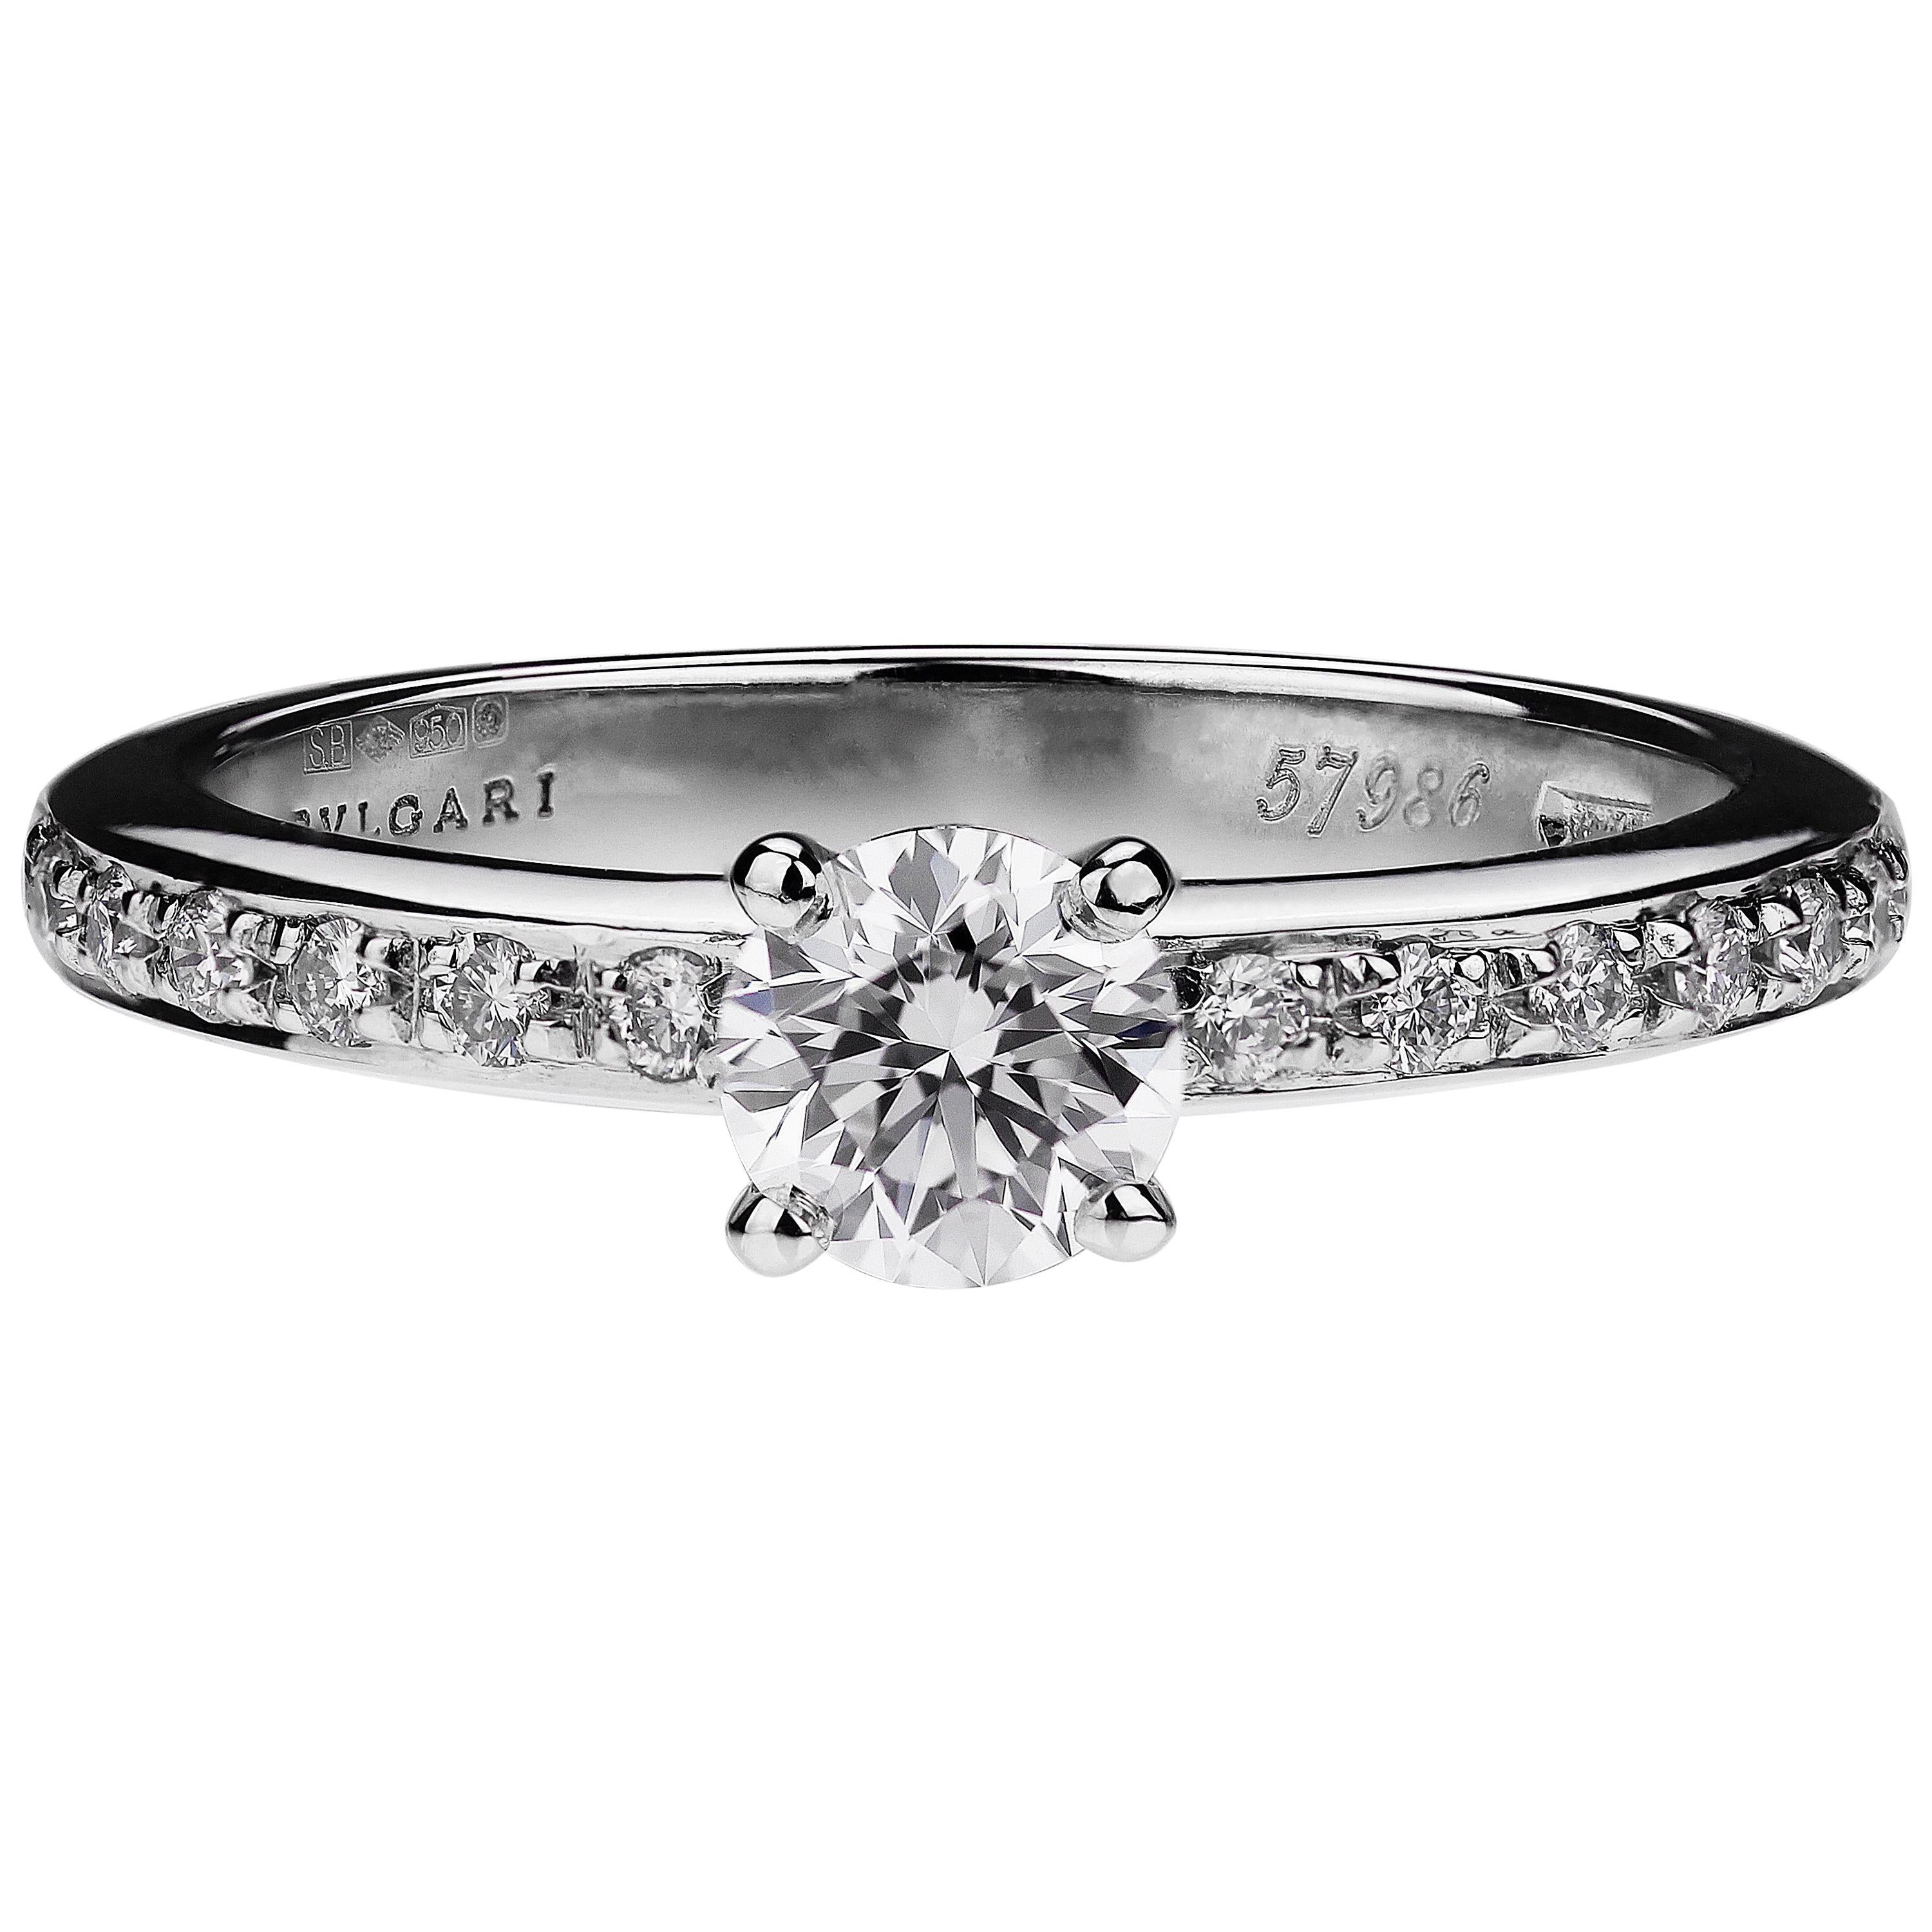 Bvlgari Griffe Ring - 2 For Sale on 1stDibs | bvlgari griffe ring price,  griffe ring bvlgari price, bulgari griffe ring price